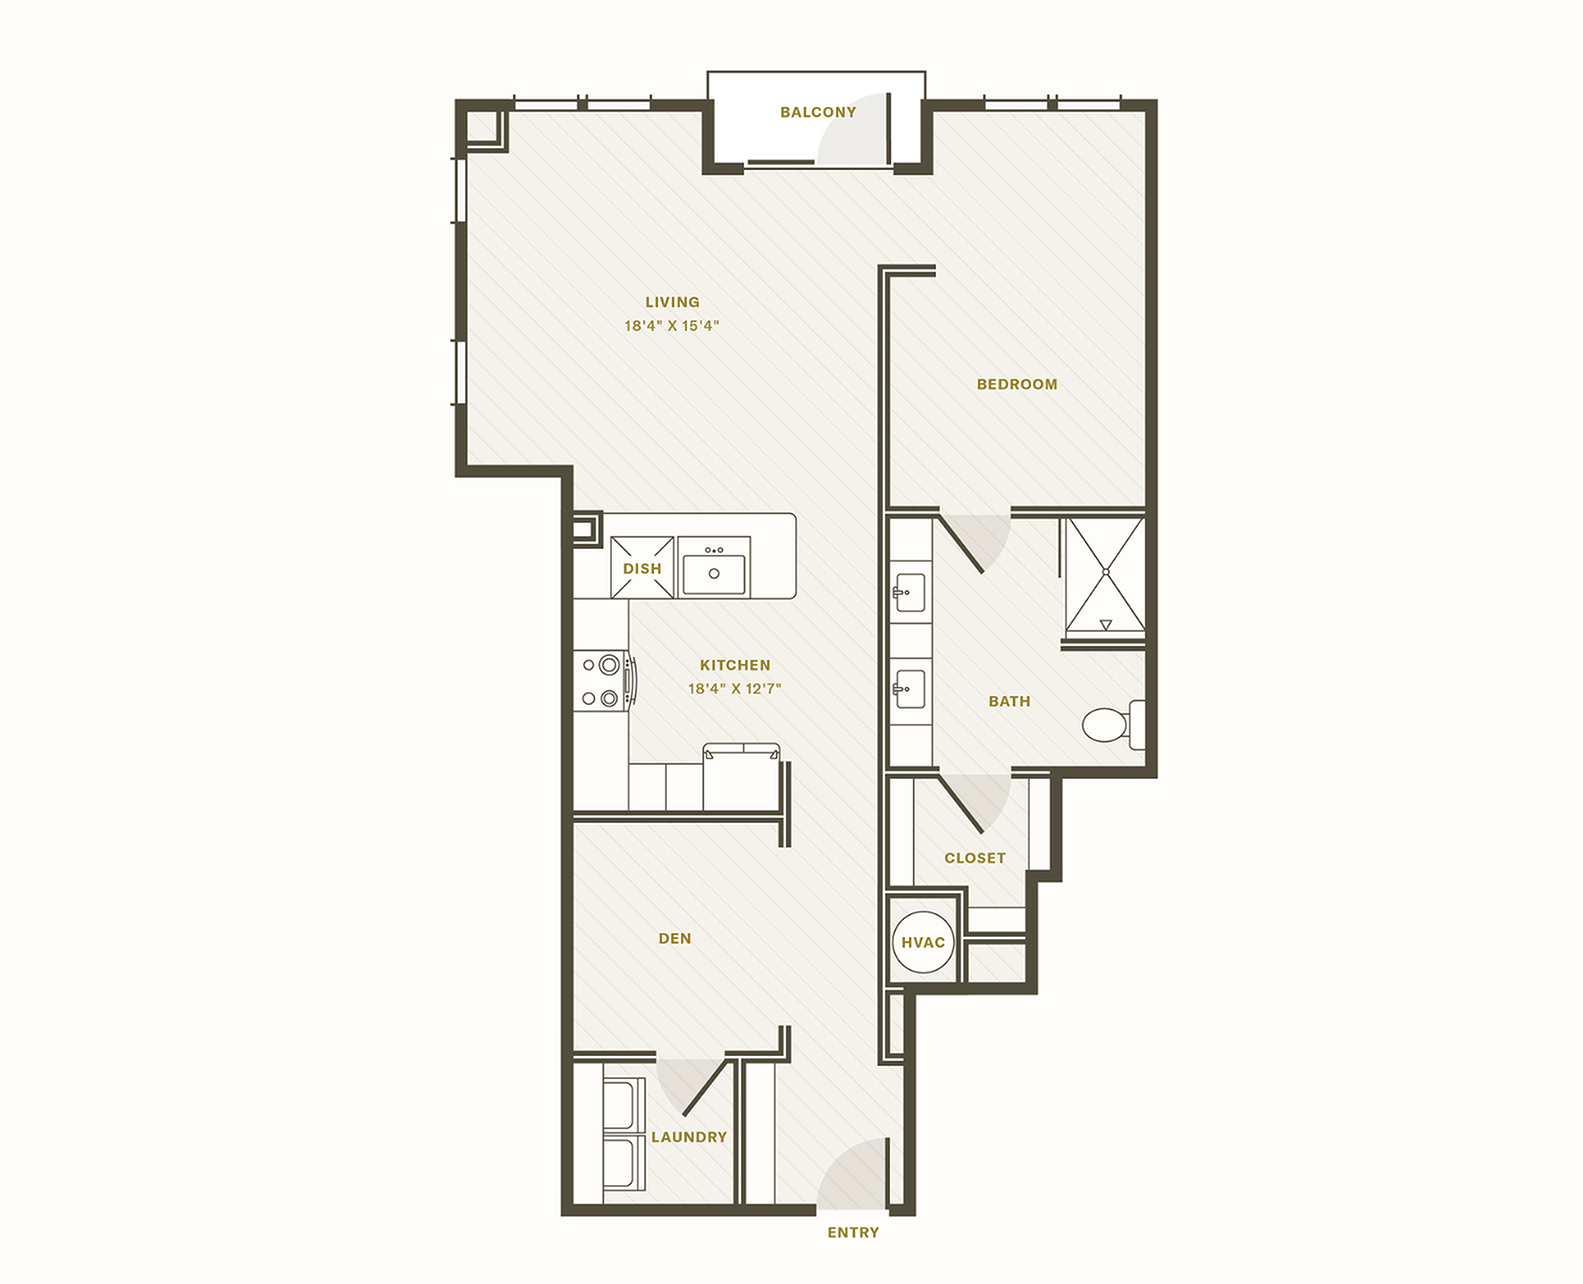 The Italianate floor plan